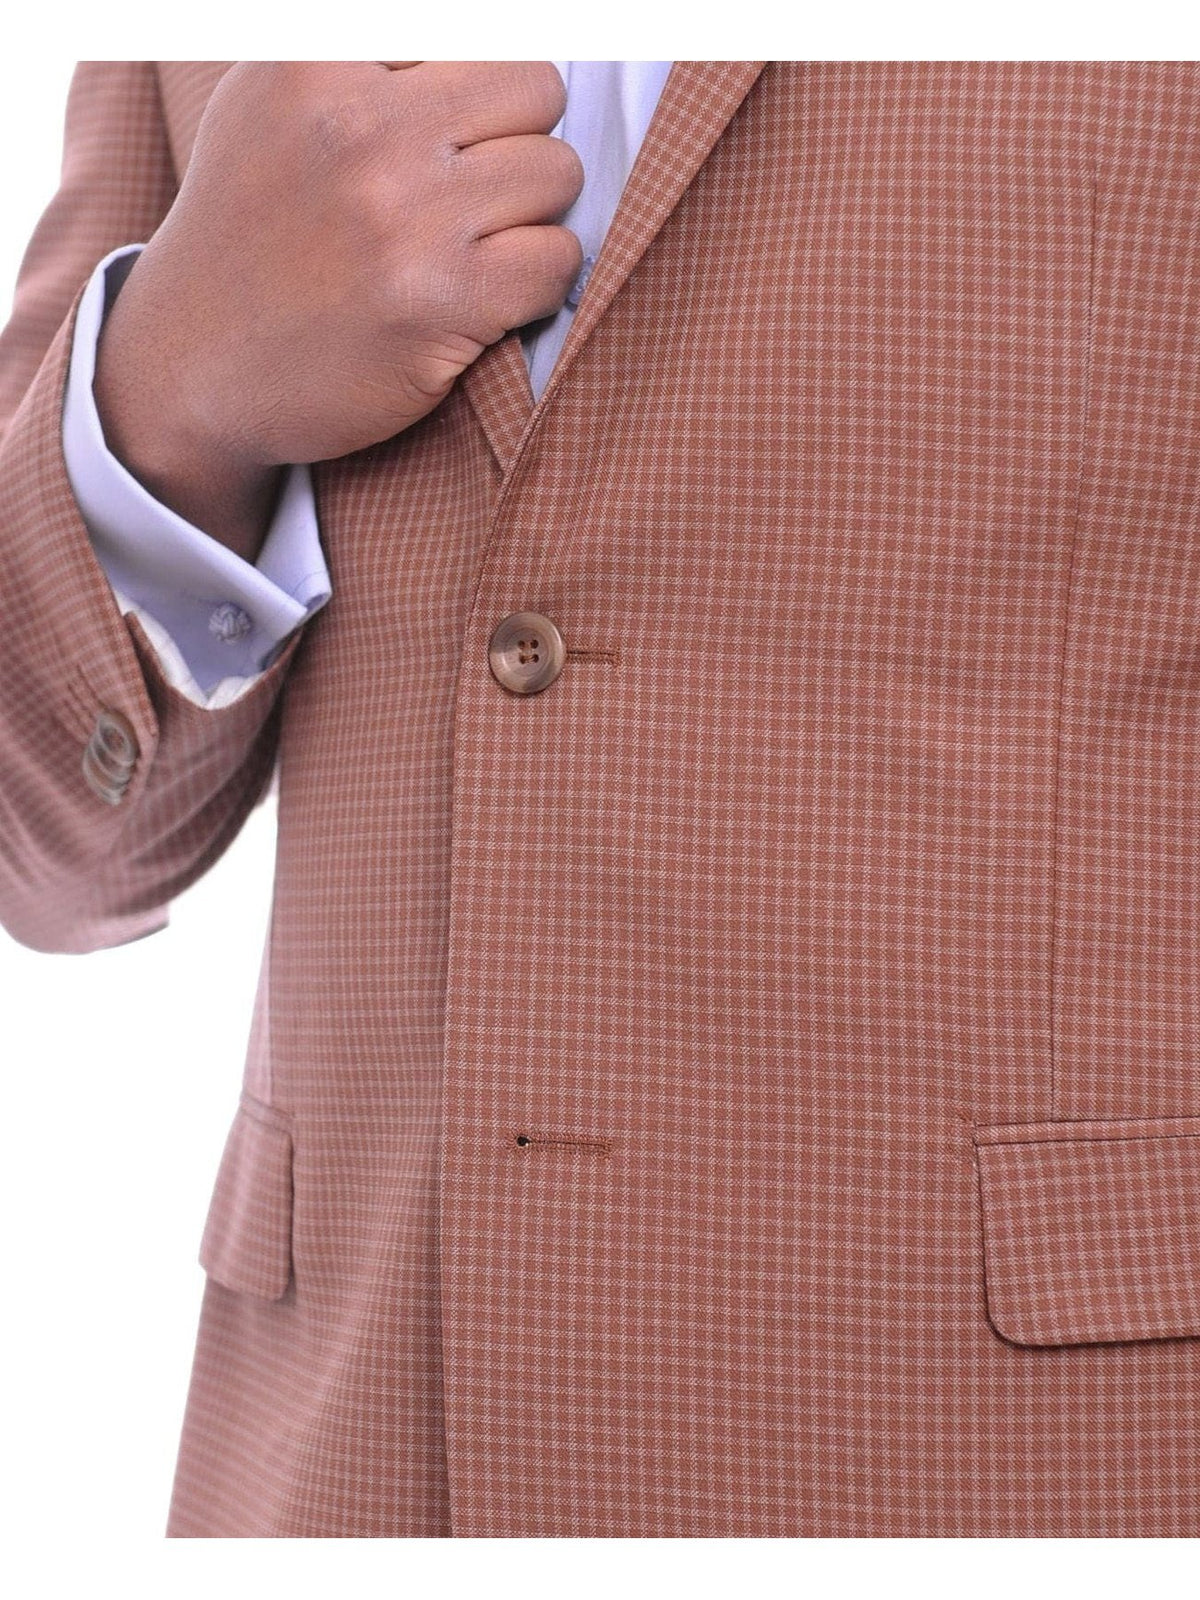 Prontomoda BLAZERS Prontomoda Classic Fit Rust Brown Check Two Button Lambs Wool Blazer Sportcoat